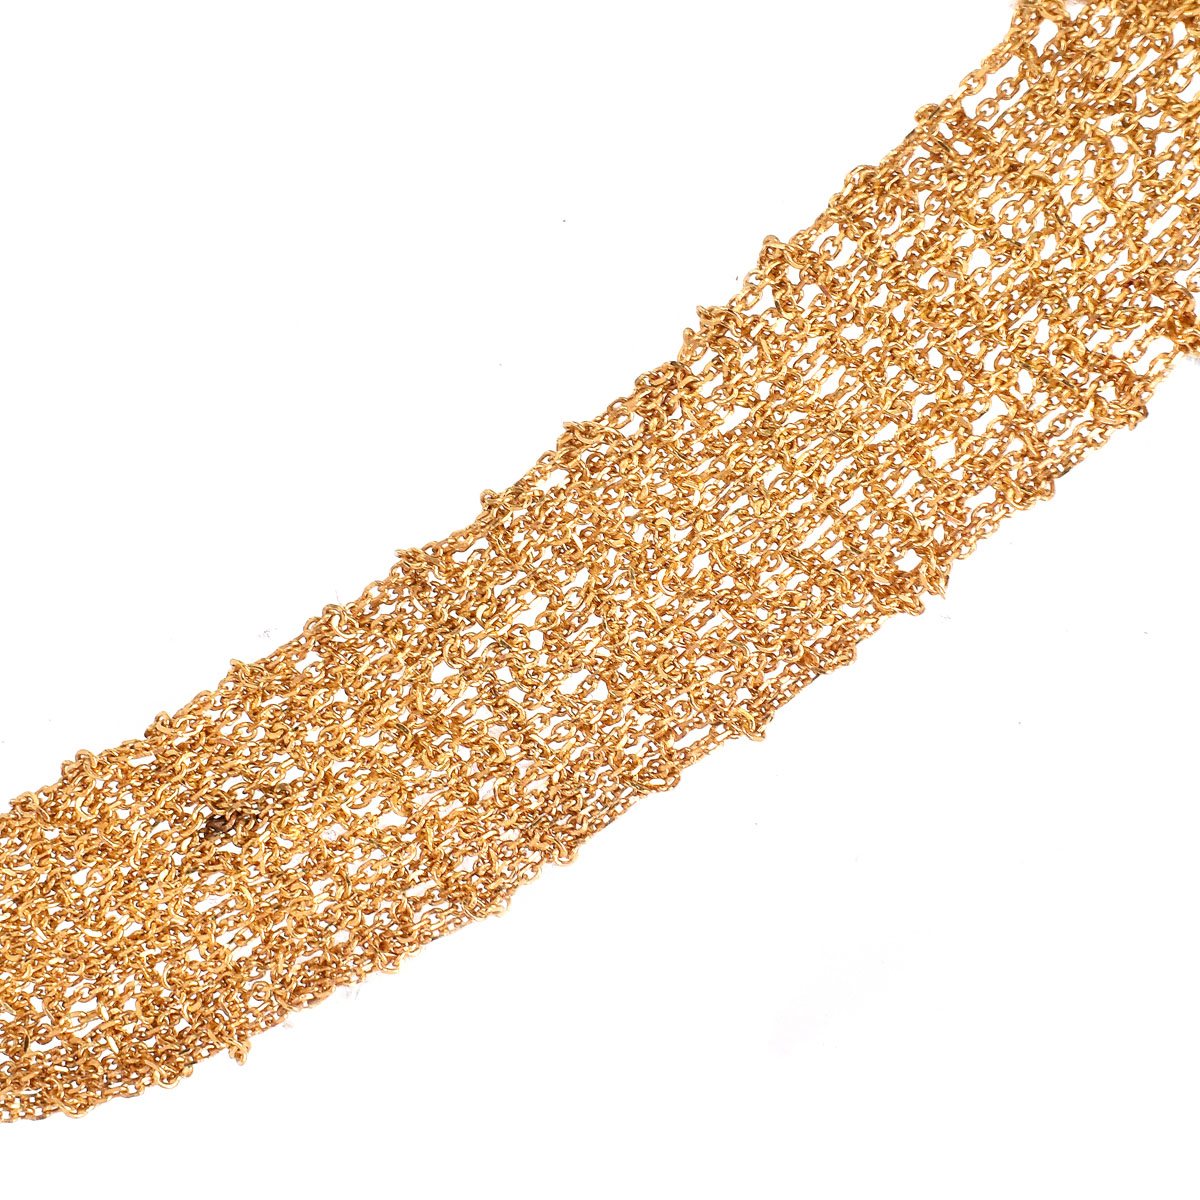 Tiffany style Italian 18 Karat Yellow Gold Mesh Scarf Necklace. Stamped 18K, Italian hallmark.